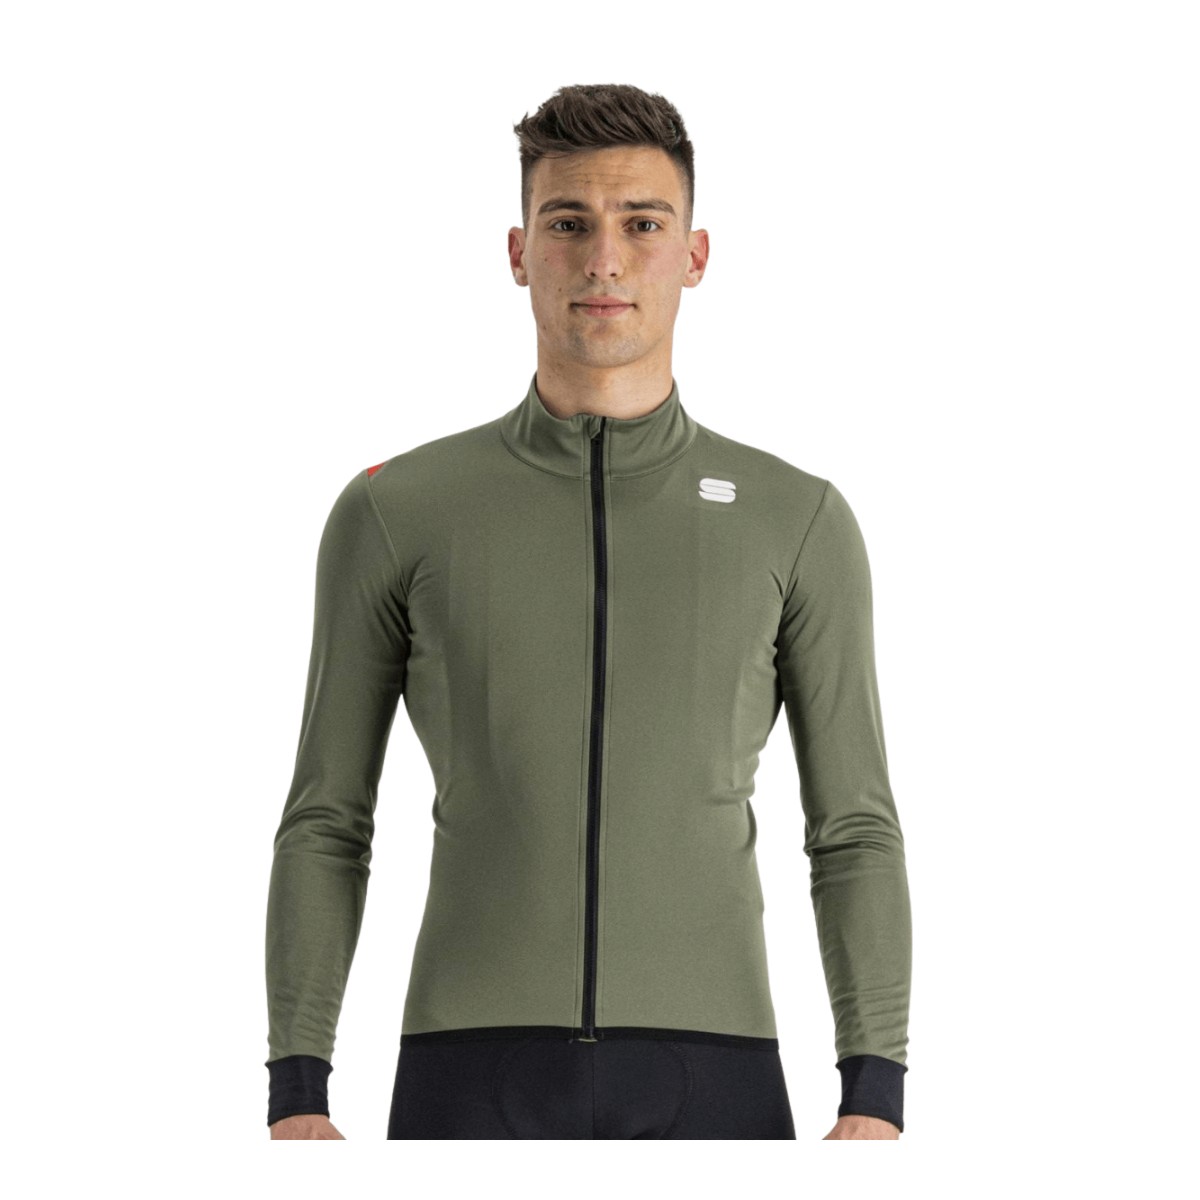 Jacket Sportful Fiandre light no rain Green, Size M